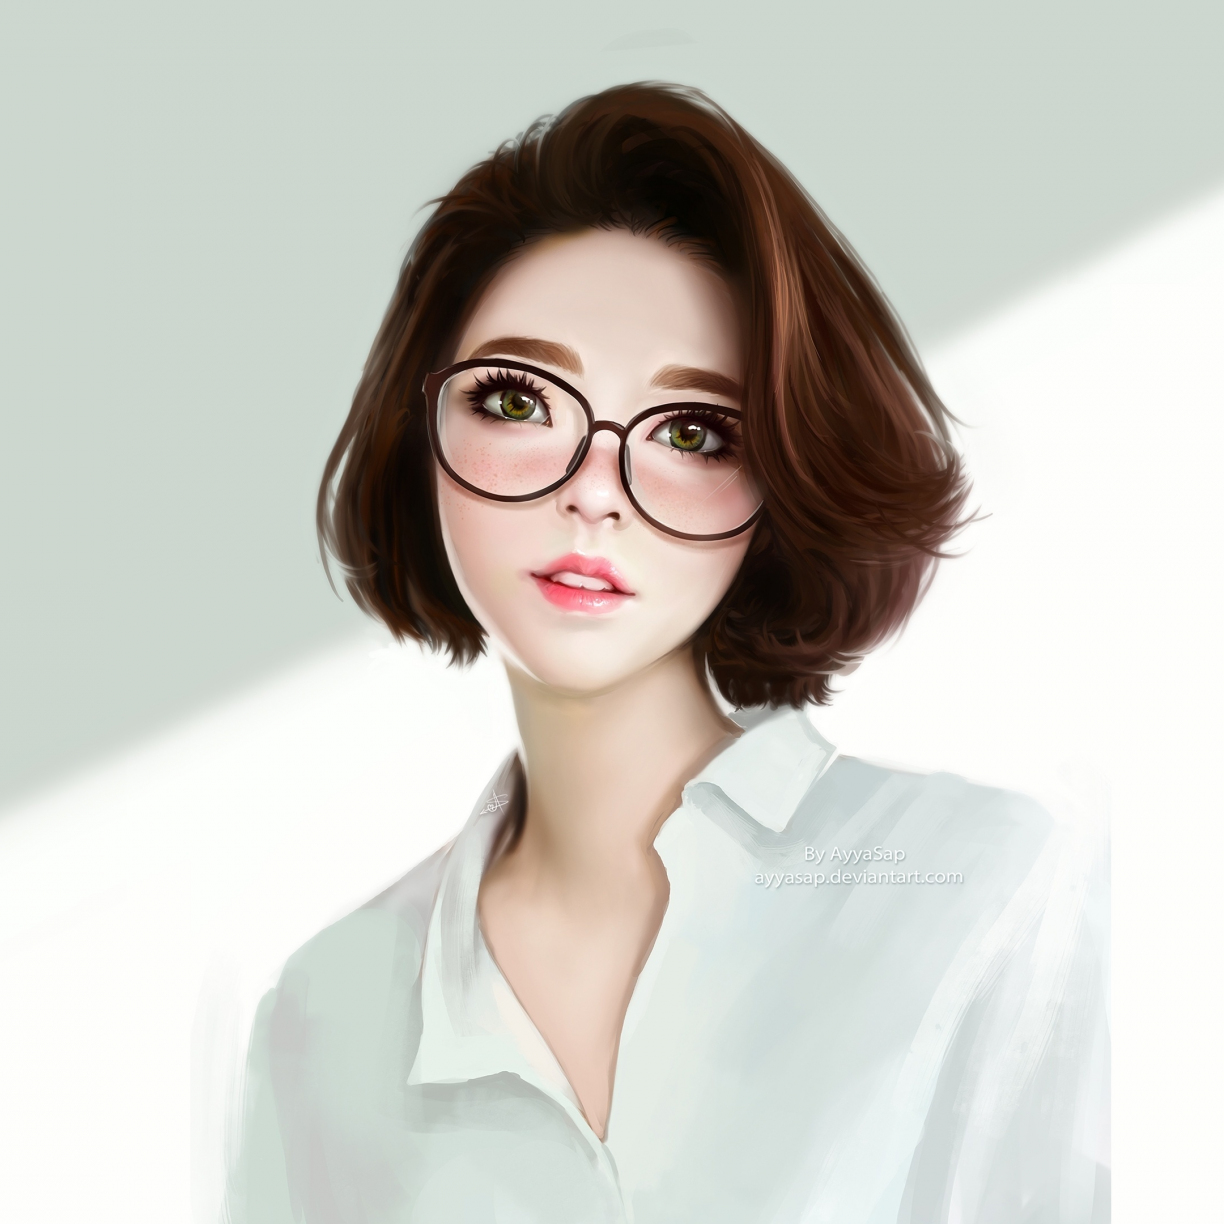 Wallpaper cute, beautiful woman, brunette, short hair, glasses desktop  wallpaper, hd image, picture, background, d3d84a | wallpapersmug